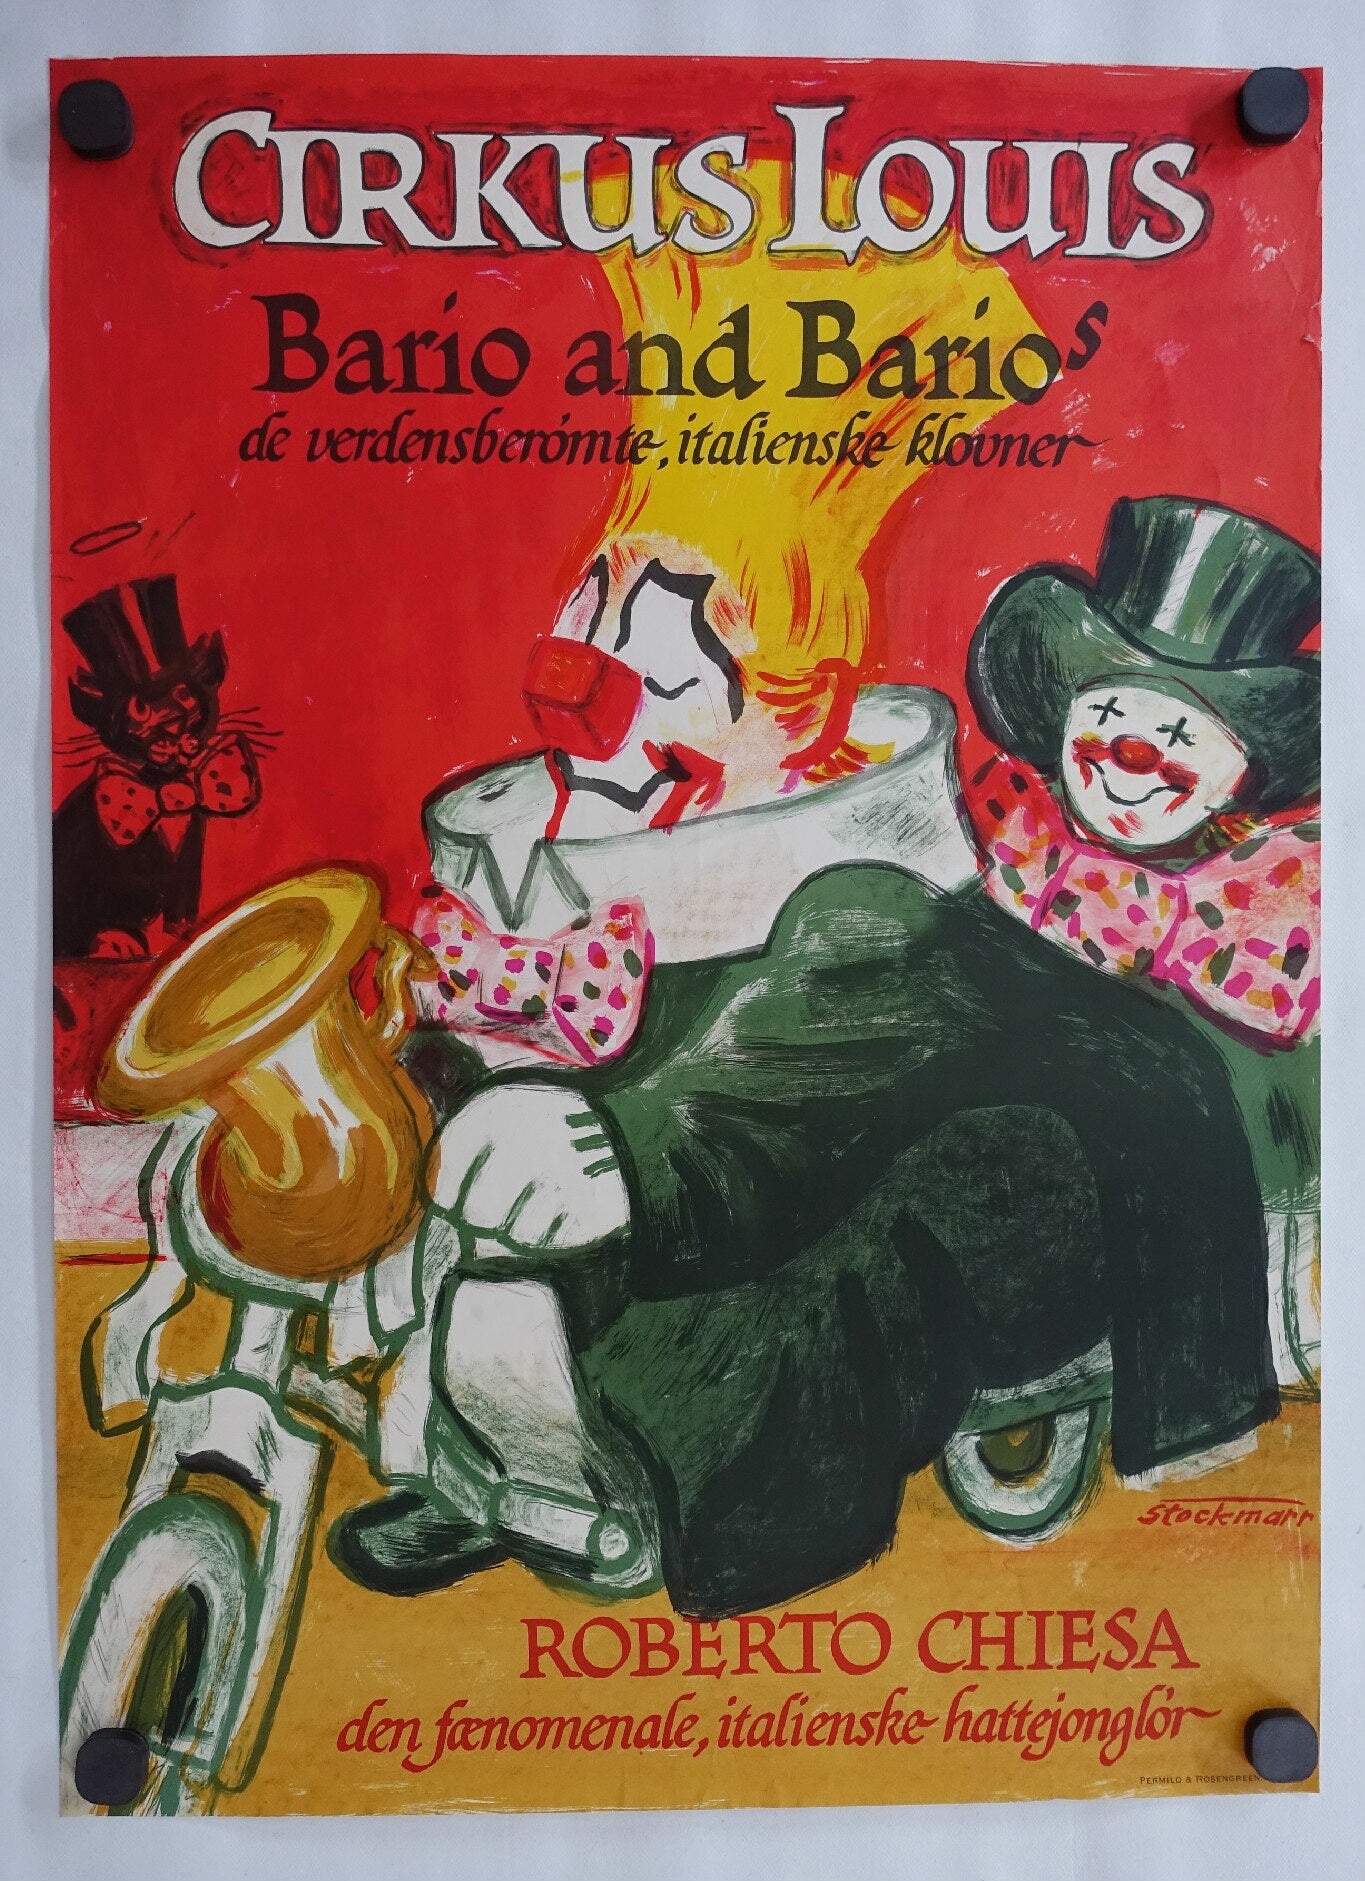 1950s Bario and Bario's in Circus Louis by Erik Stockmarr - Original Vintage Poster